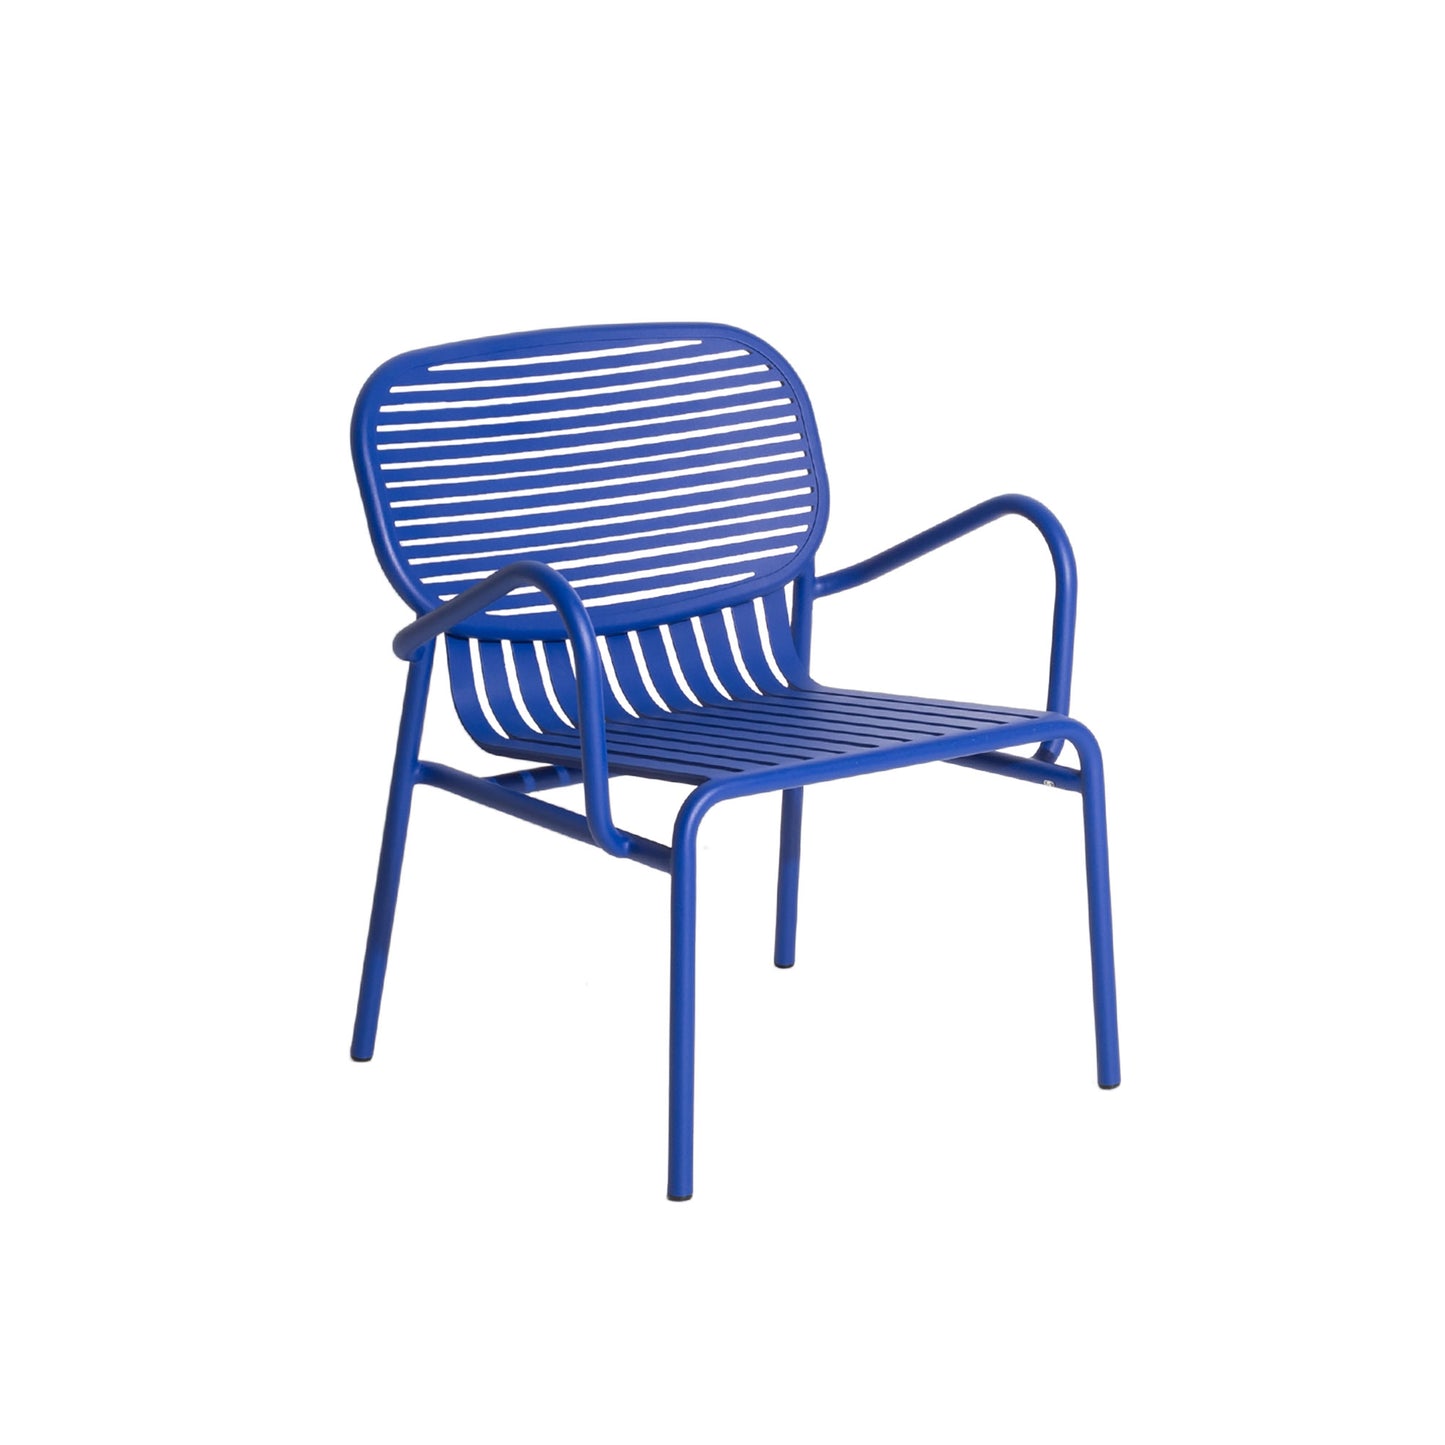 WEEK-END Armchair by Petite Friture #Blue